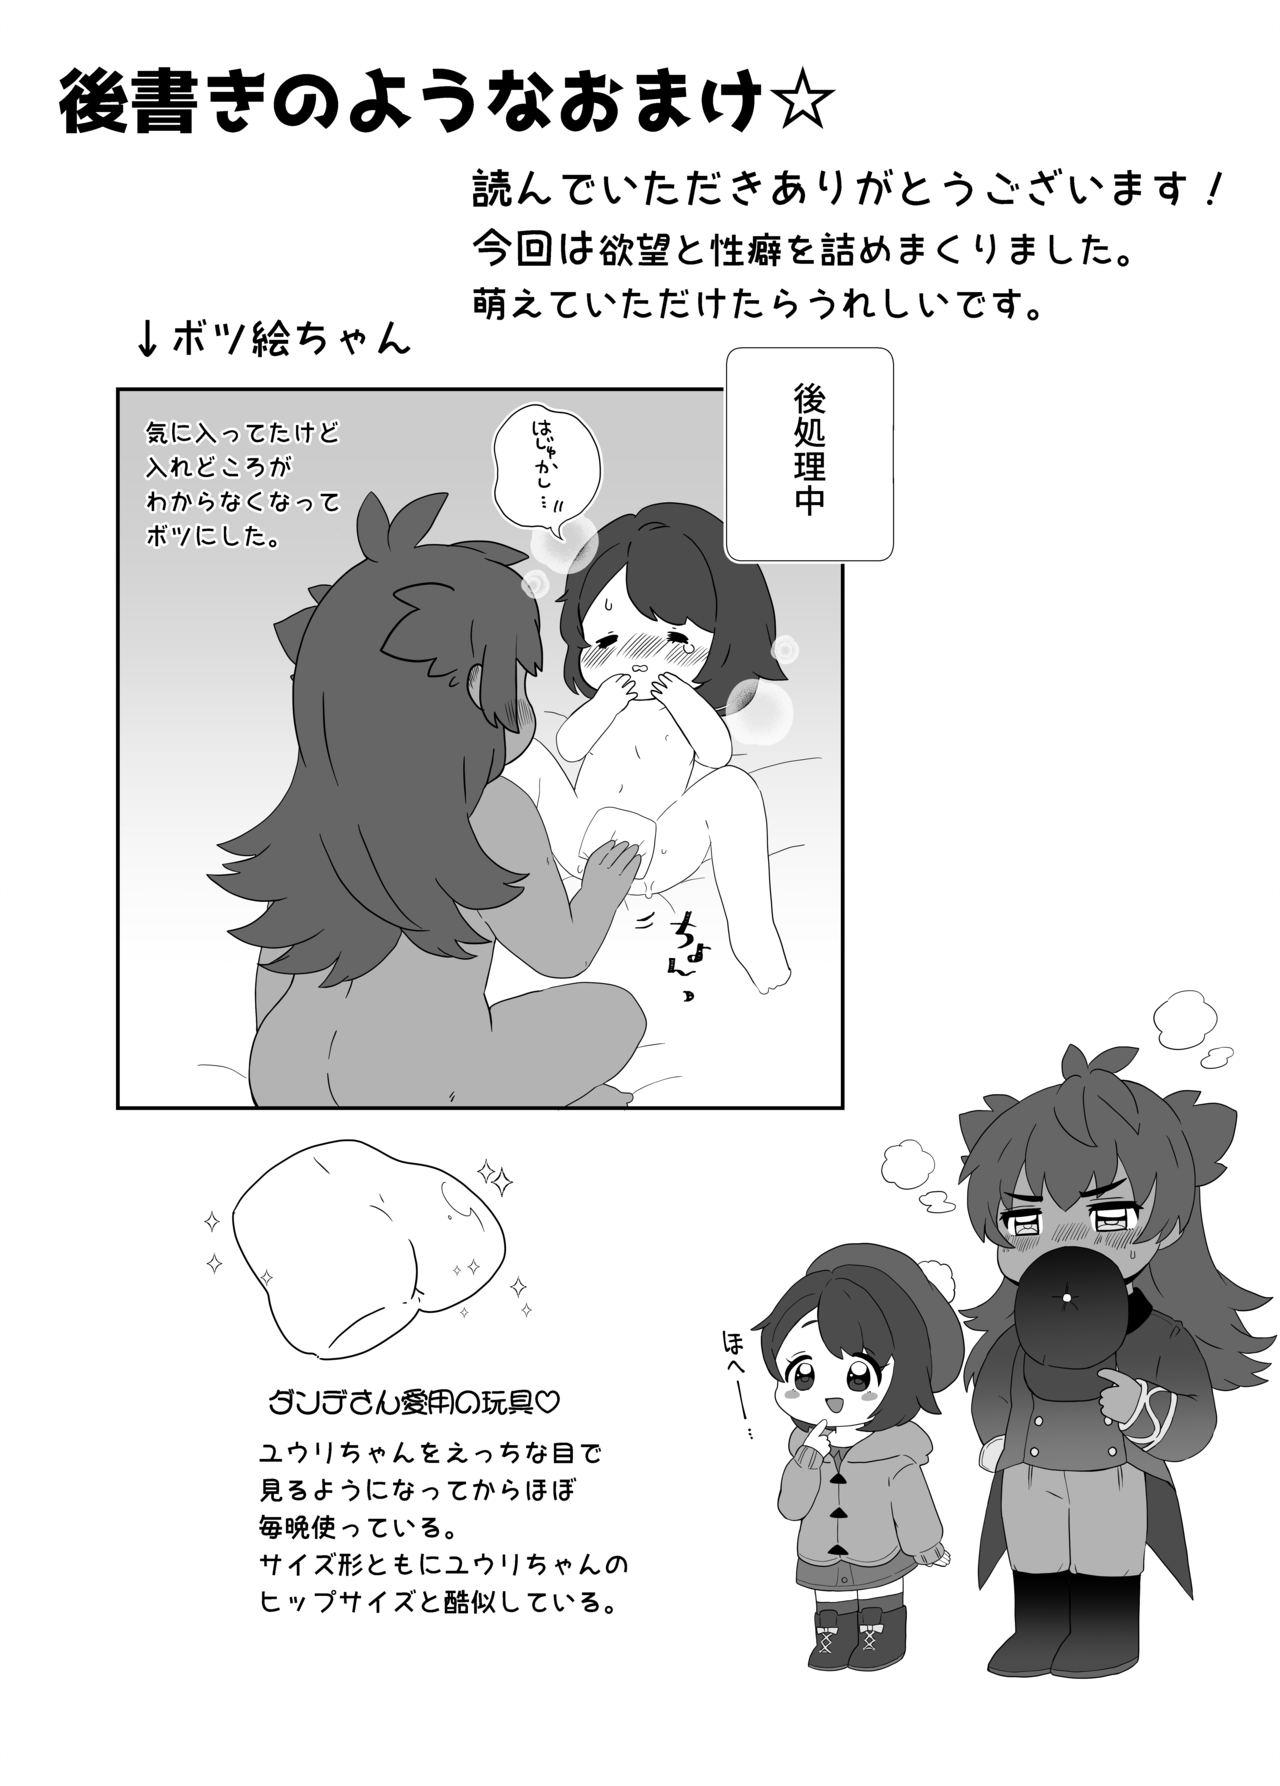 Chacal Daisukidakara Daijoubu! - Pokemon | pocket monsters Gay Cash - Page 19